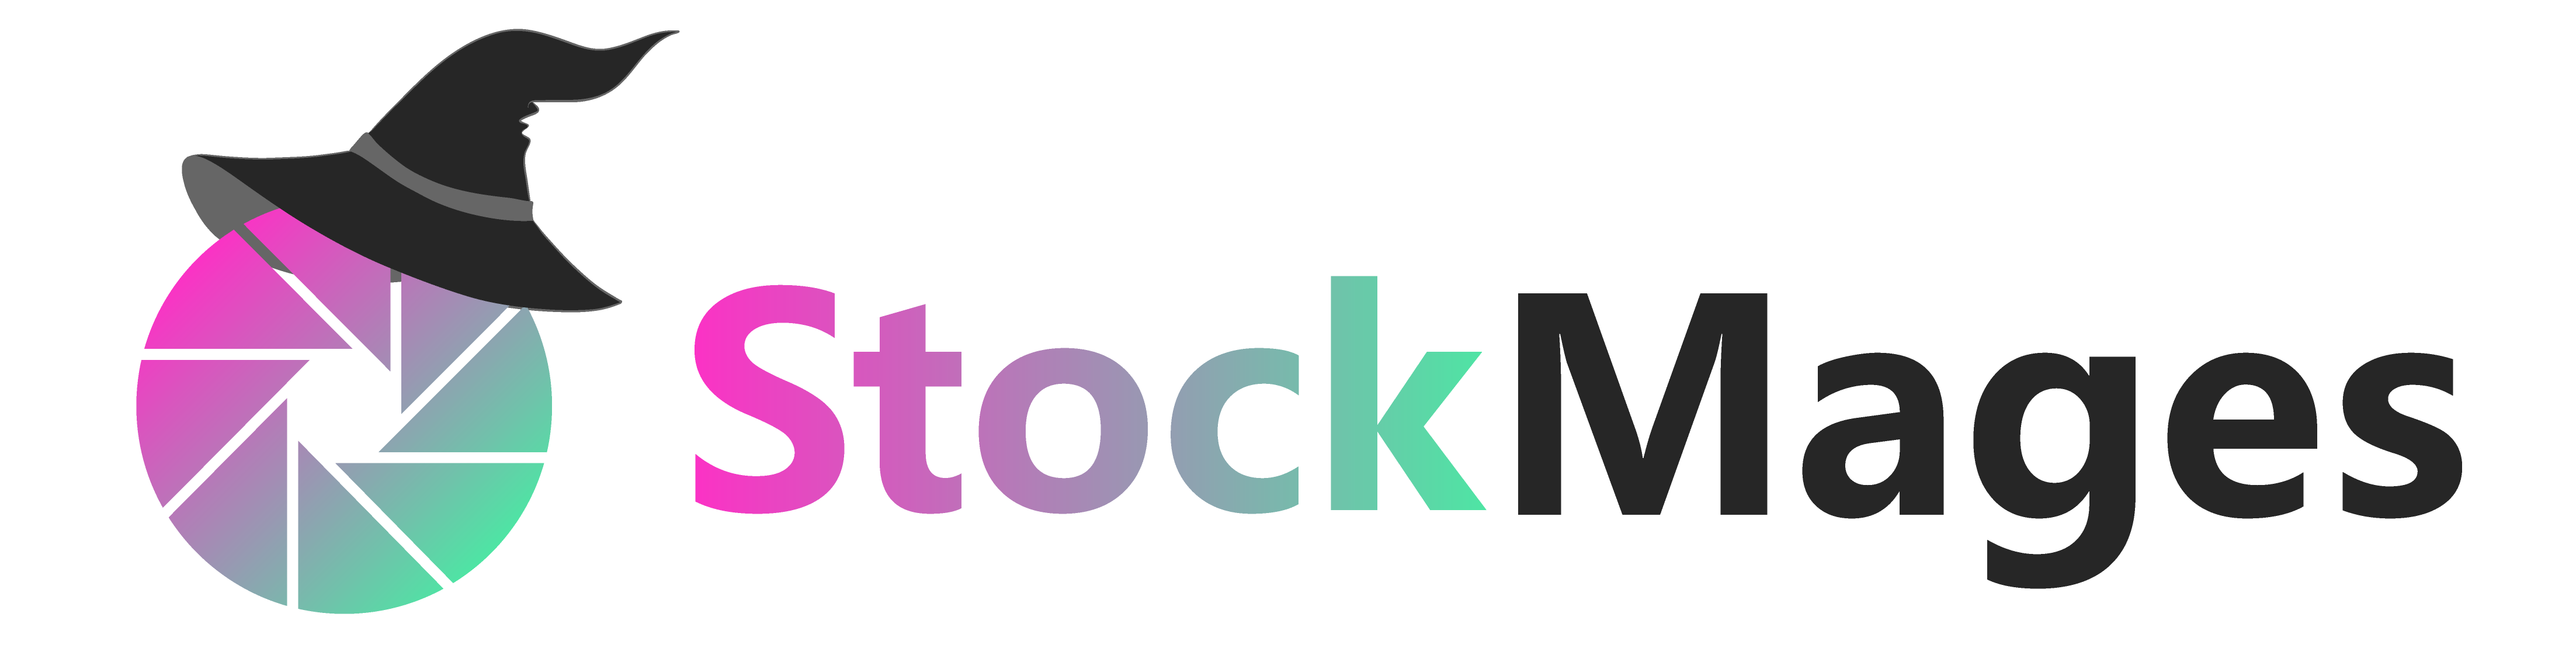 stockMages logo black